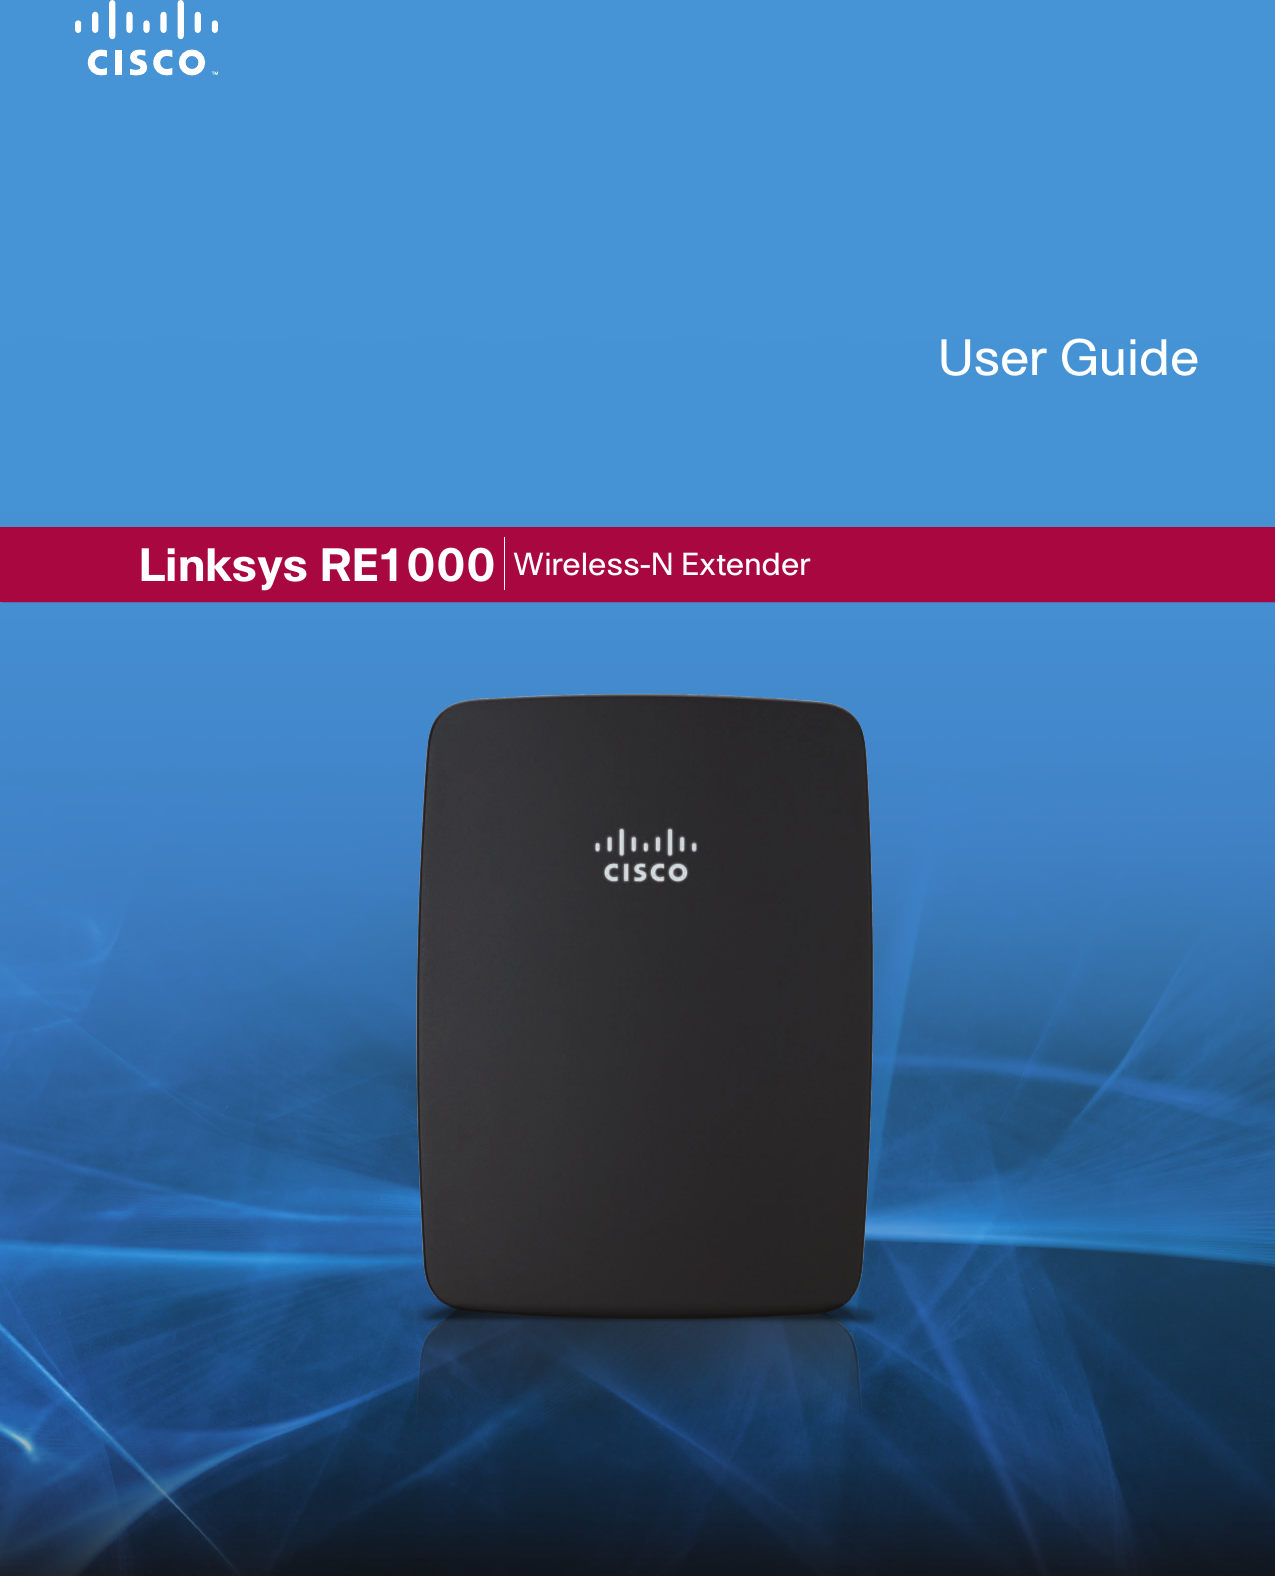 Linksys E3000 High Performance Wireless-N RouterLinksys RE1000 Wireless-N ExtenderUser Guide